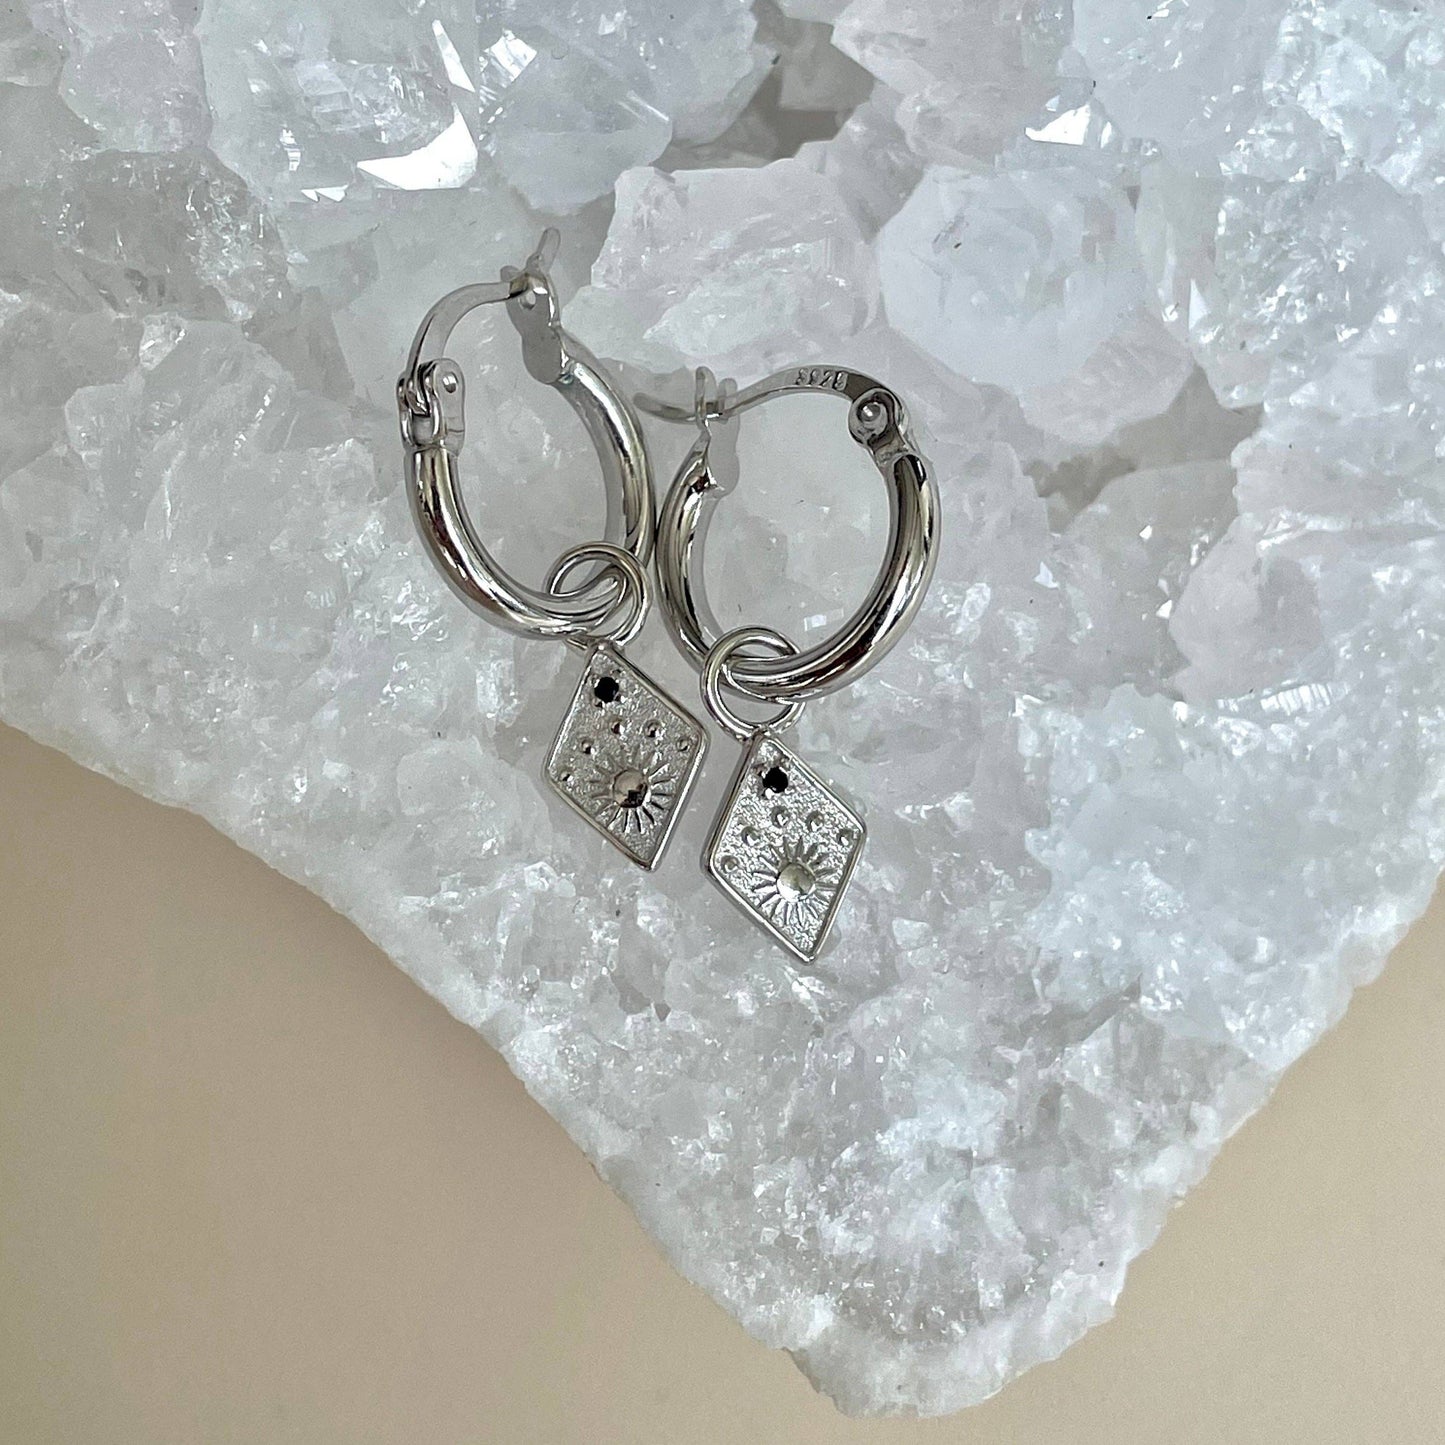 Soleil Earrings in Silver